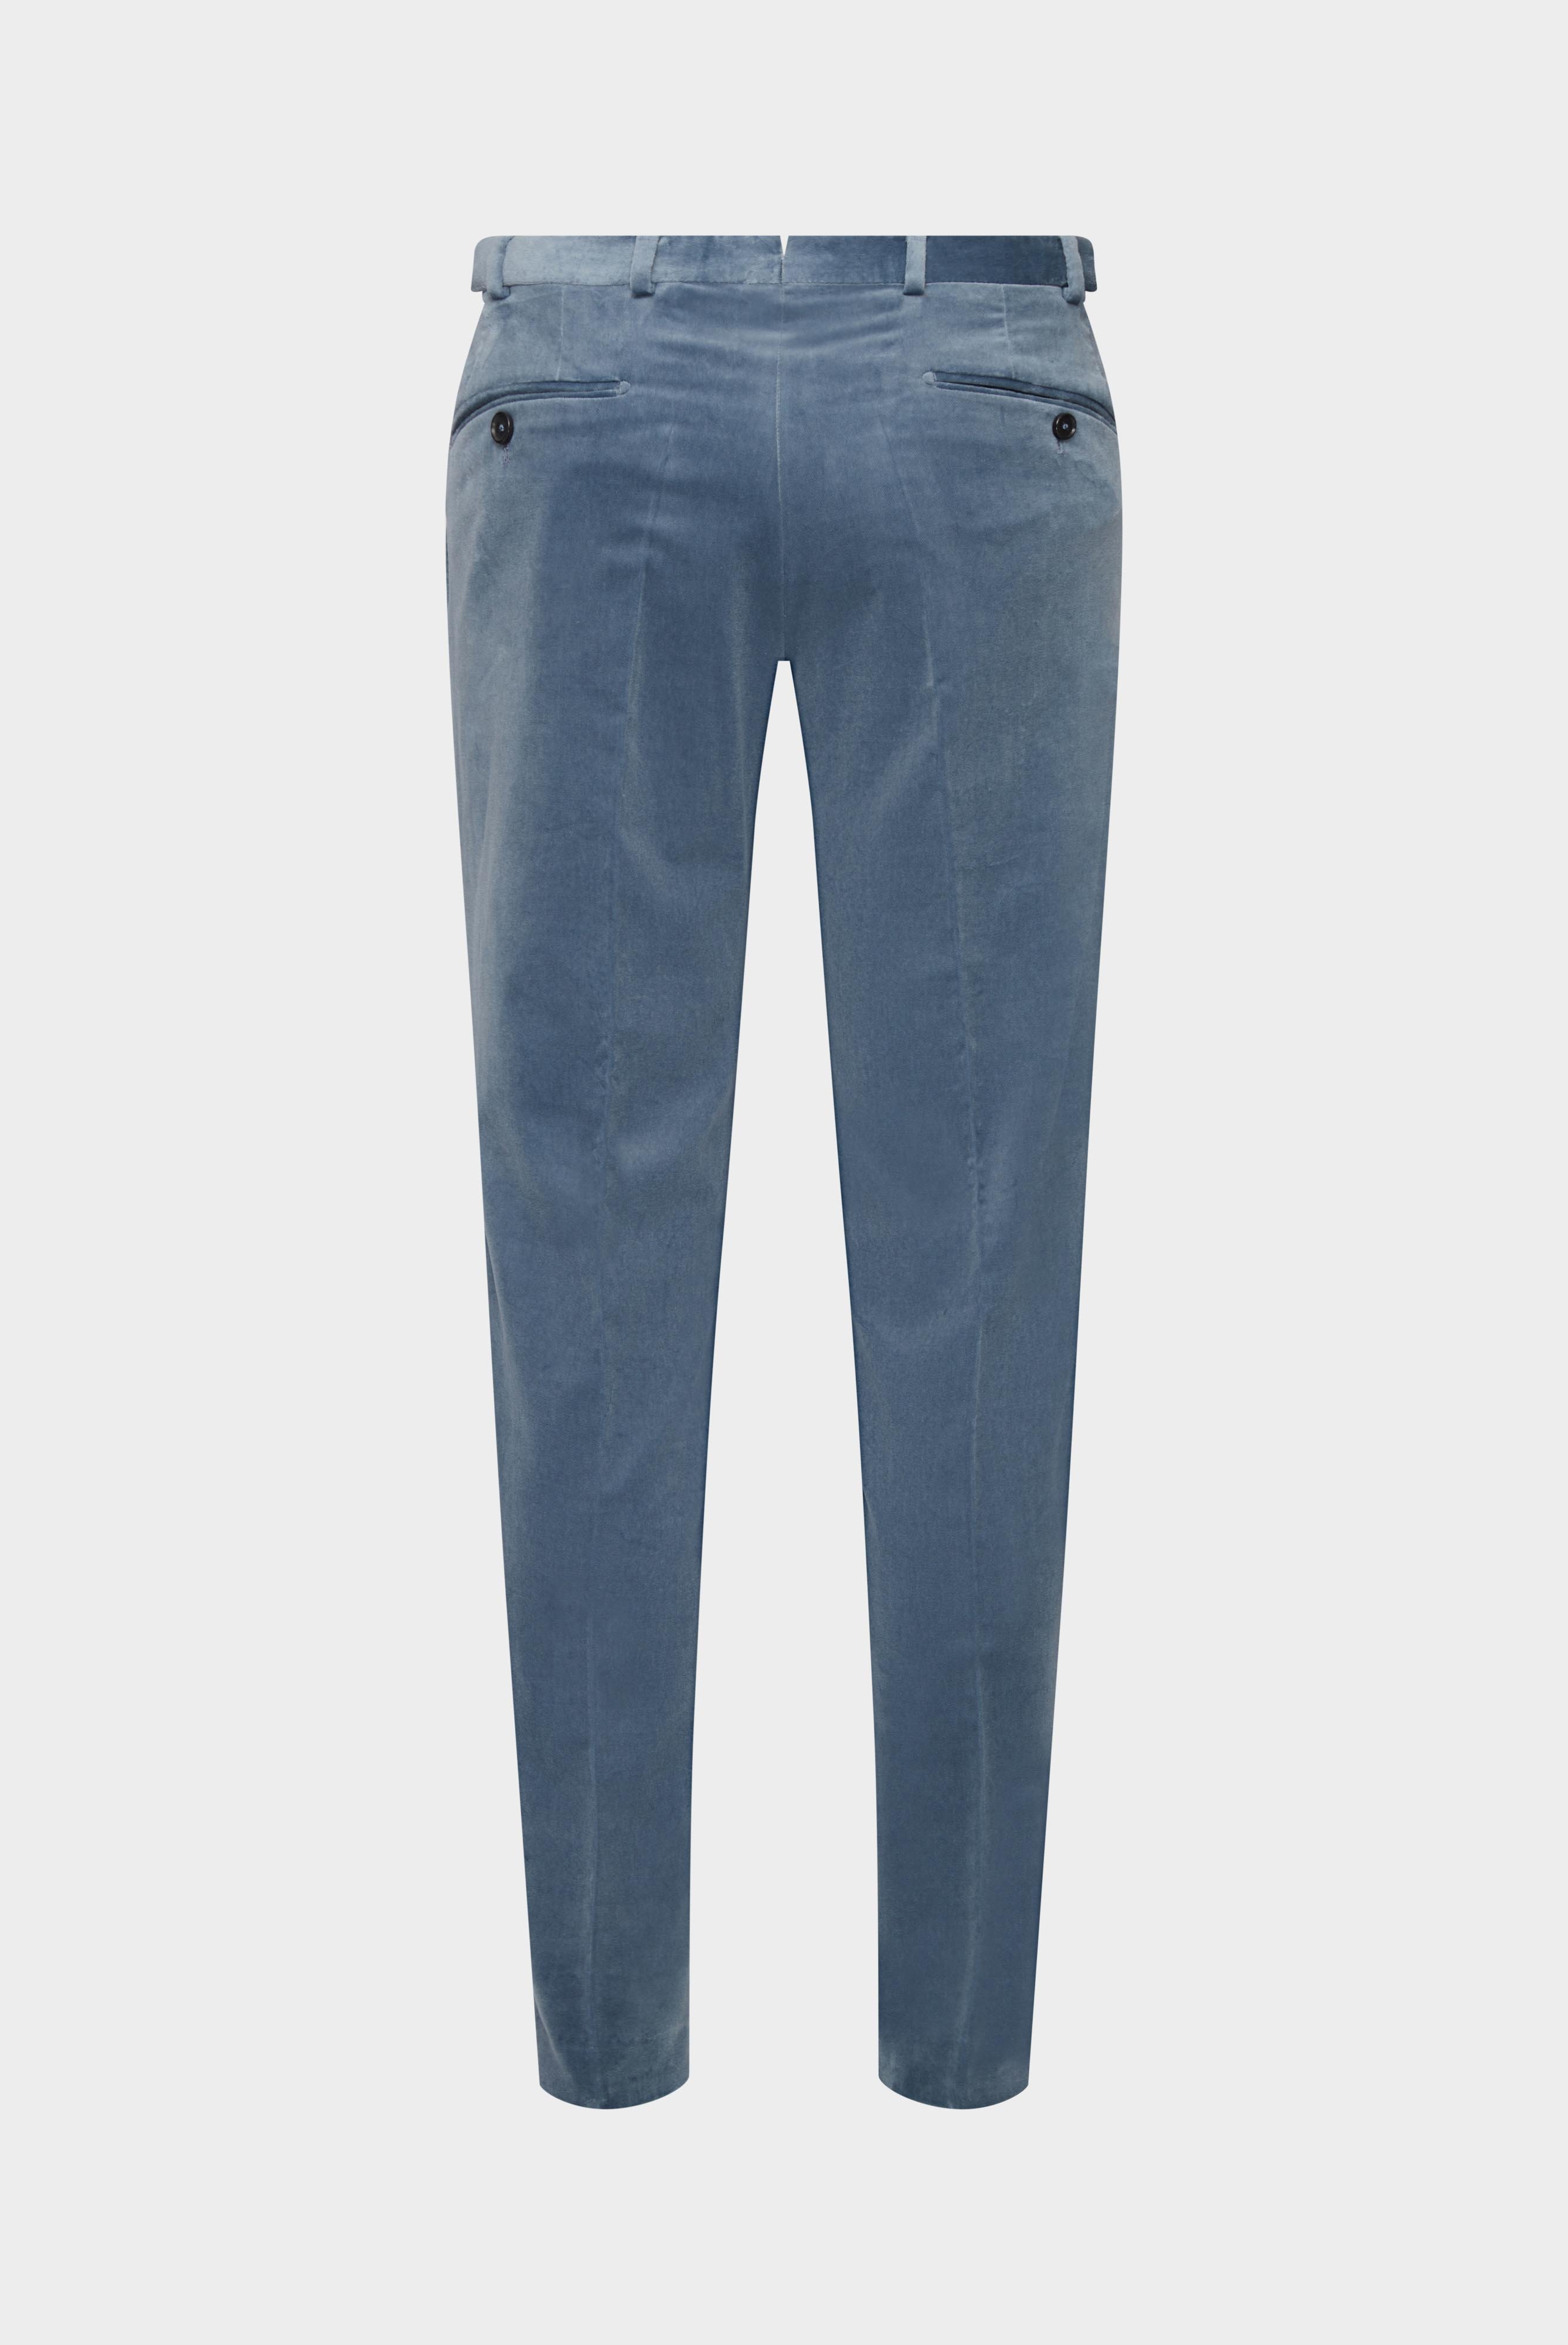 Jeans & Hosen+Hose aus Samt Slim Fit+20.7854.16.H00847.740.46